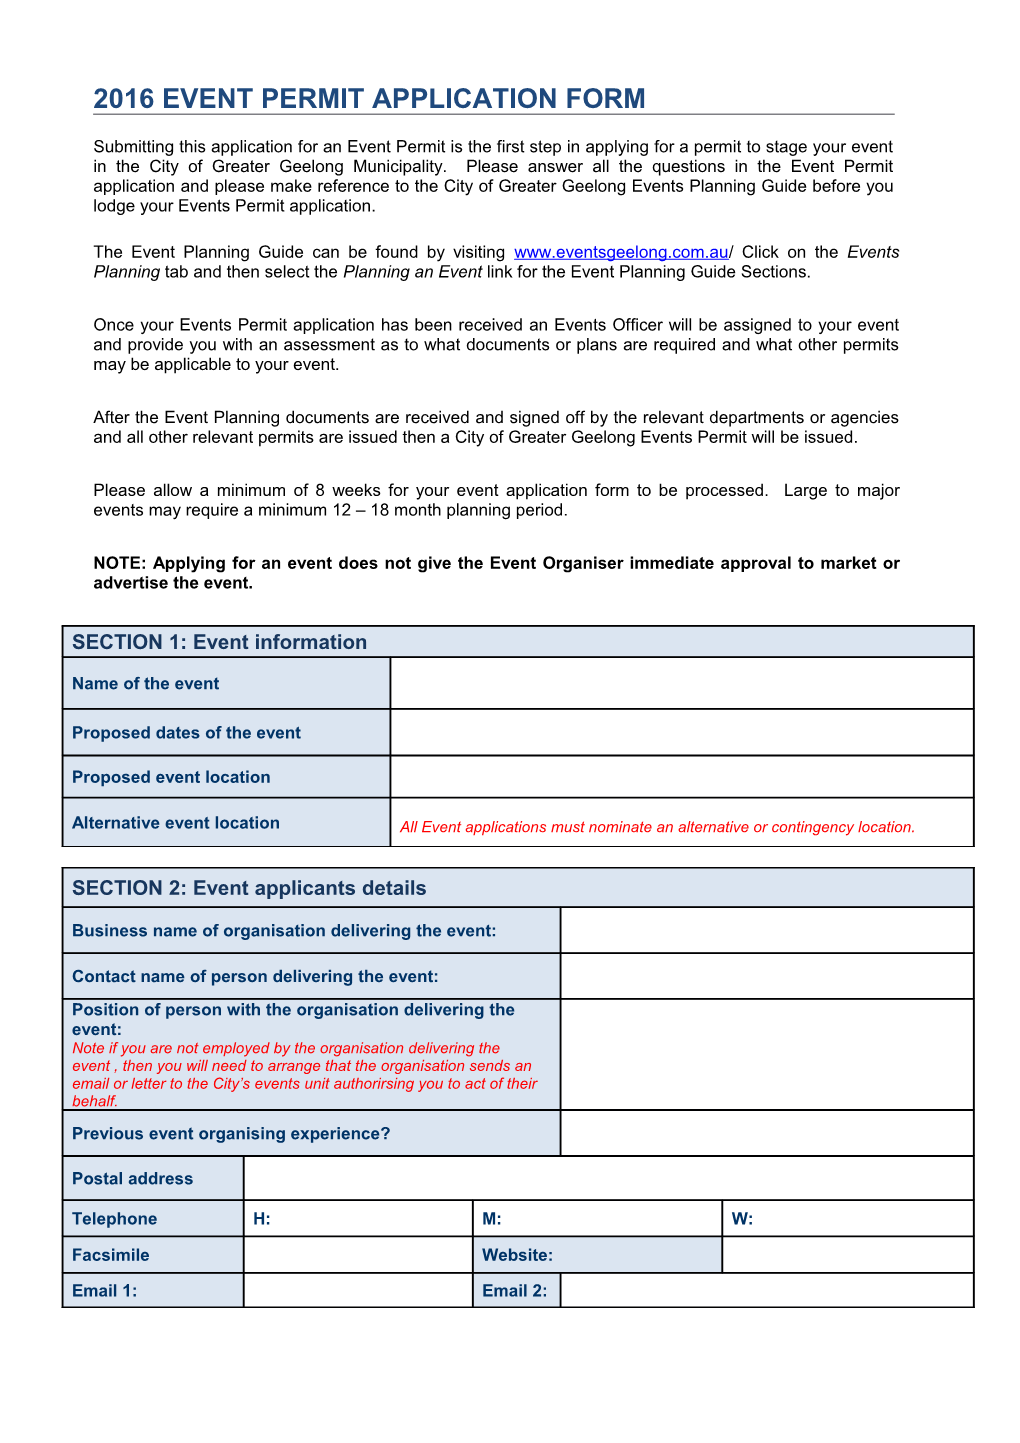 2016 Event Permit Application Form